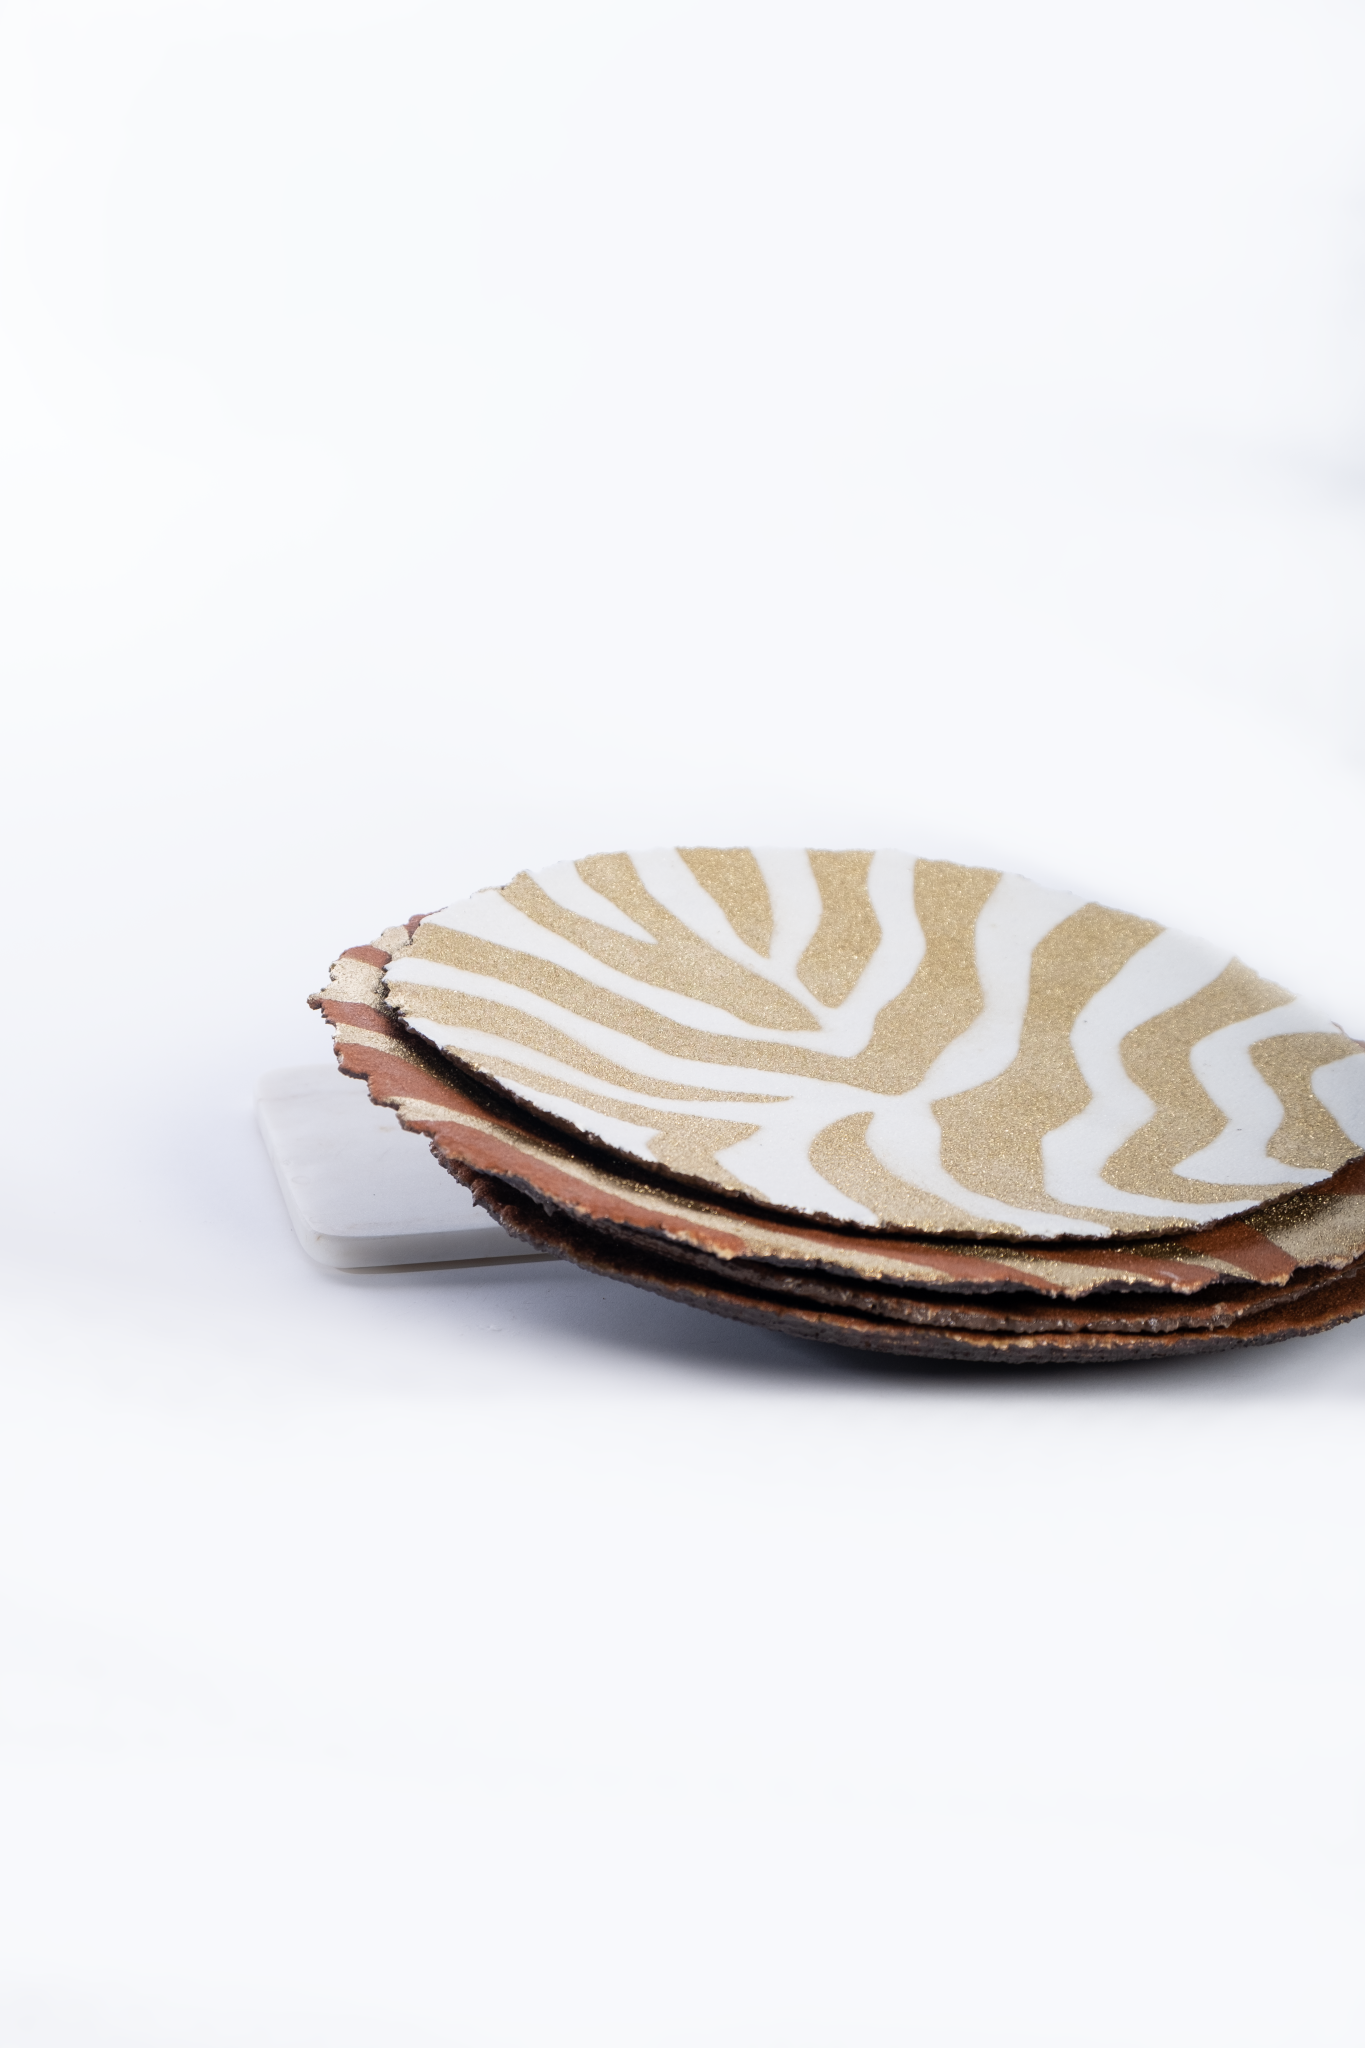 Decorative Sand Plates